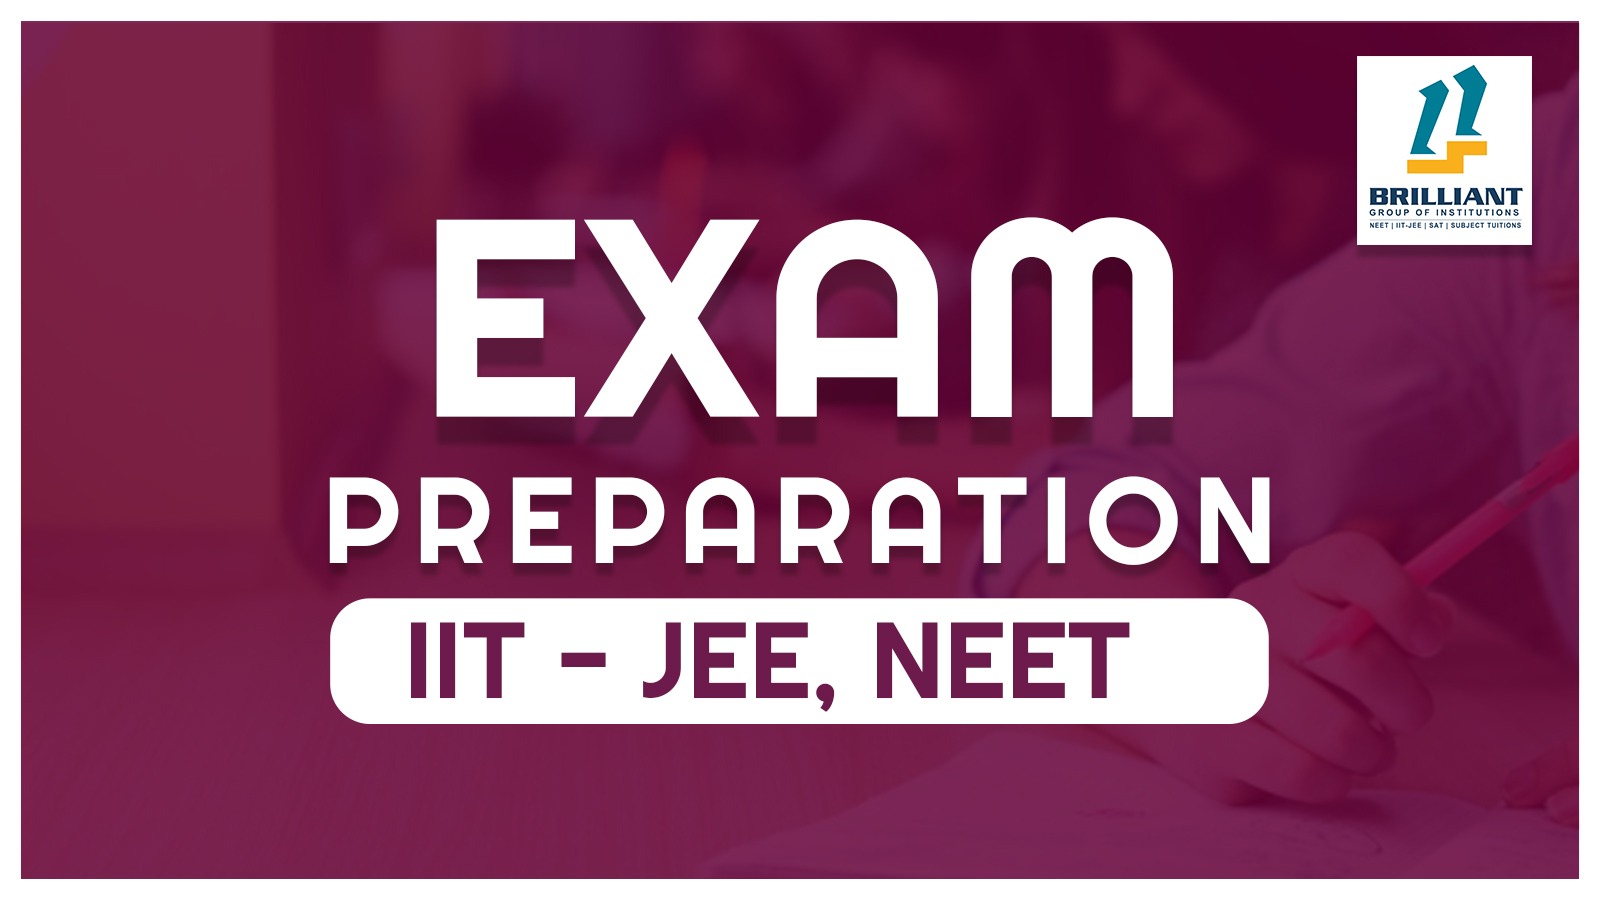 NEET & IIT-JEE Exam Preparation Videos